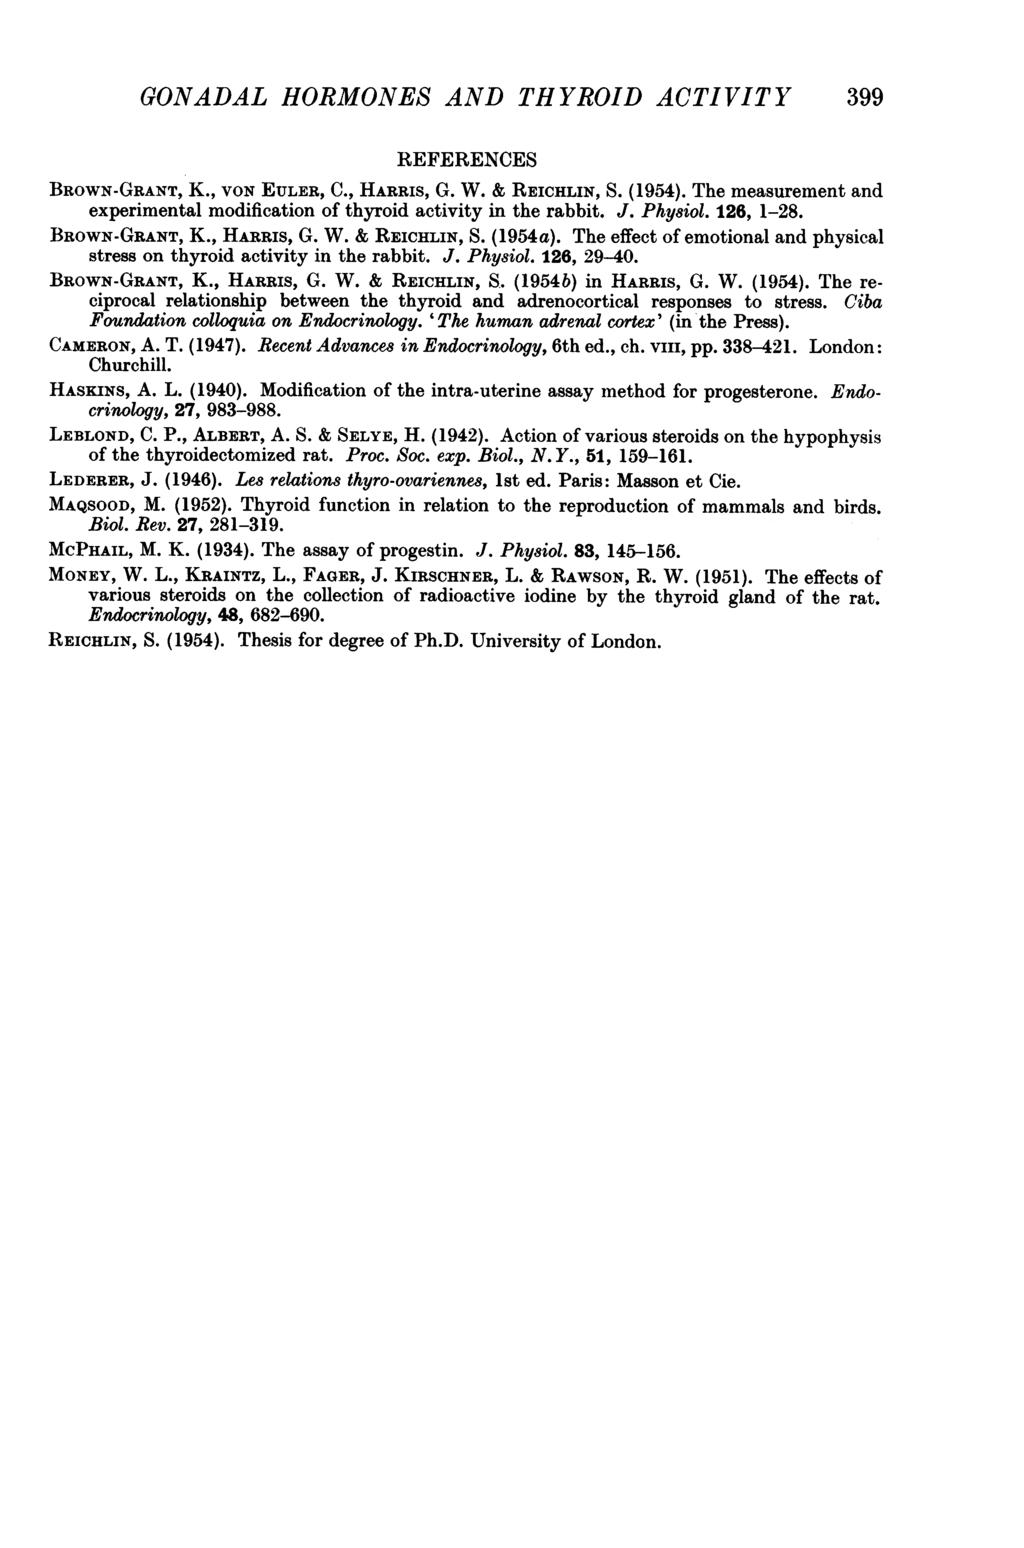 GONADAL HORMONES AND THYROID ACTIVITY 399 REFERENCES BROWN-GRANT, K., VON EULER, C., HARRIS, G. W. & REICHLIN, S. (1954).